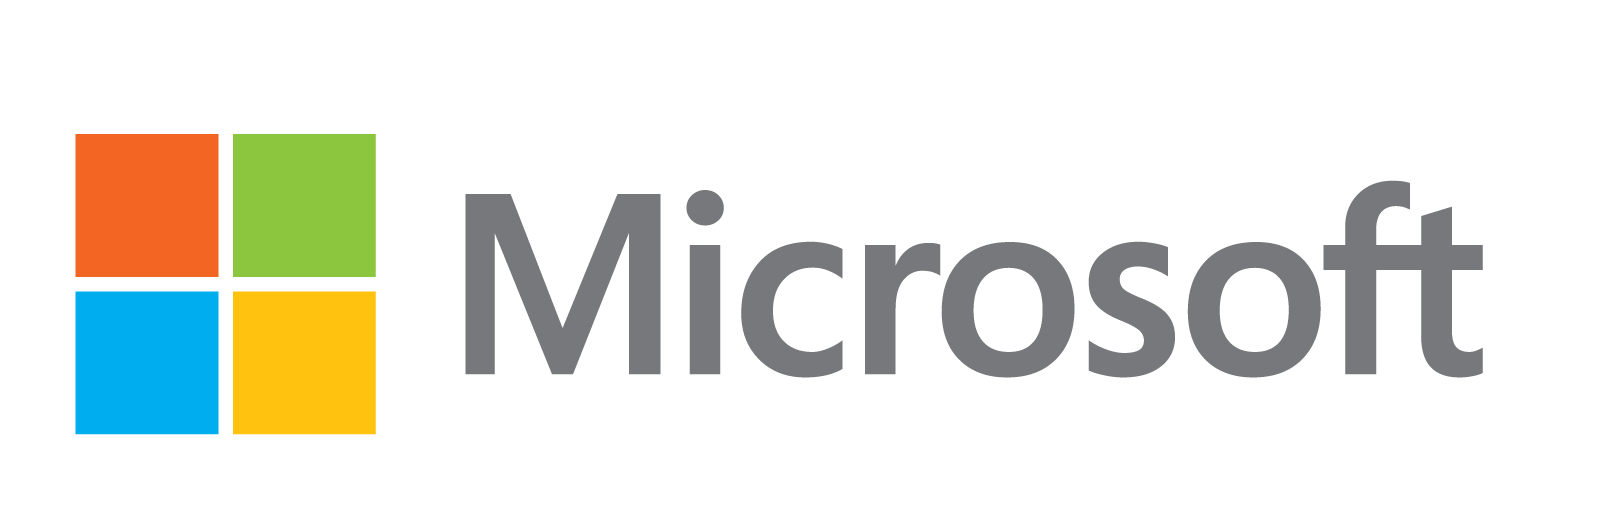 Microsoft logo with transparent background